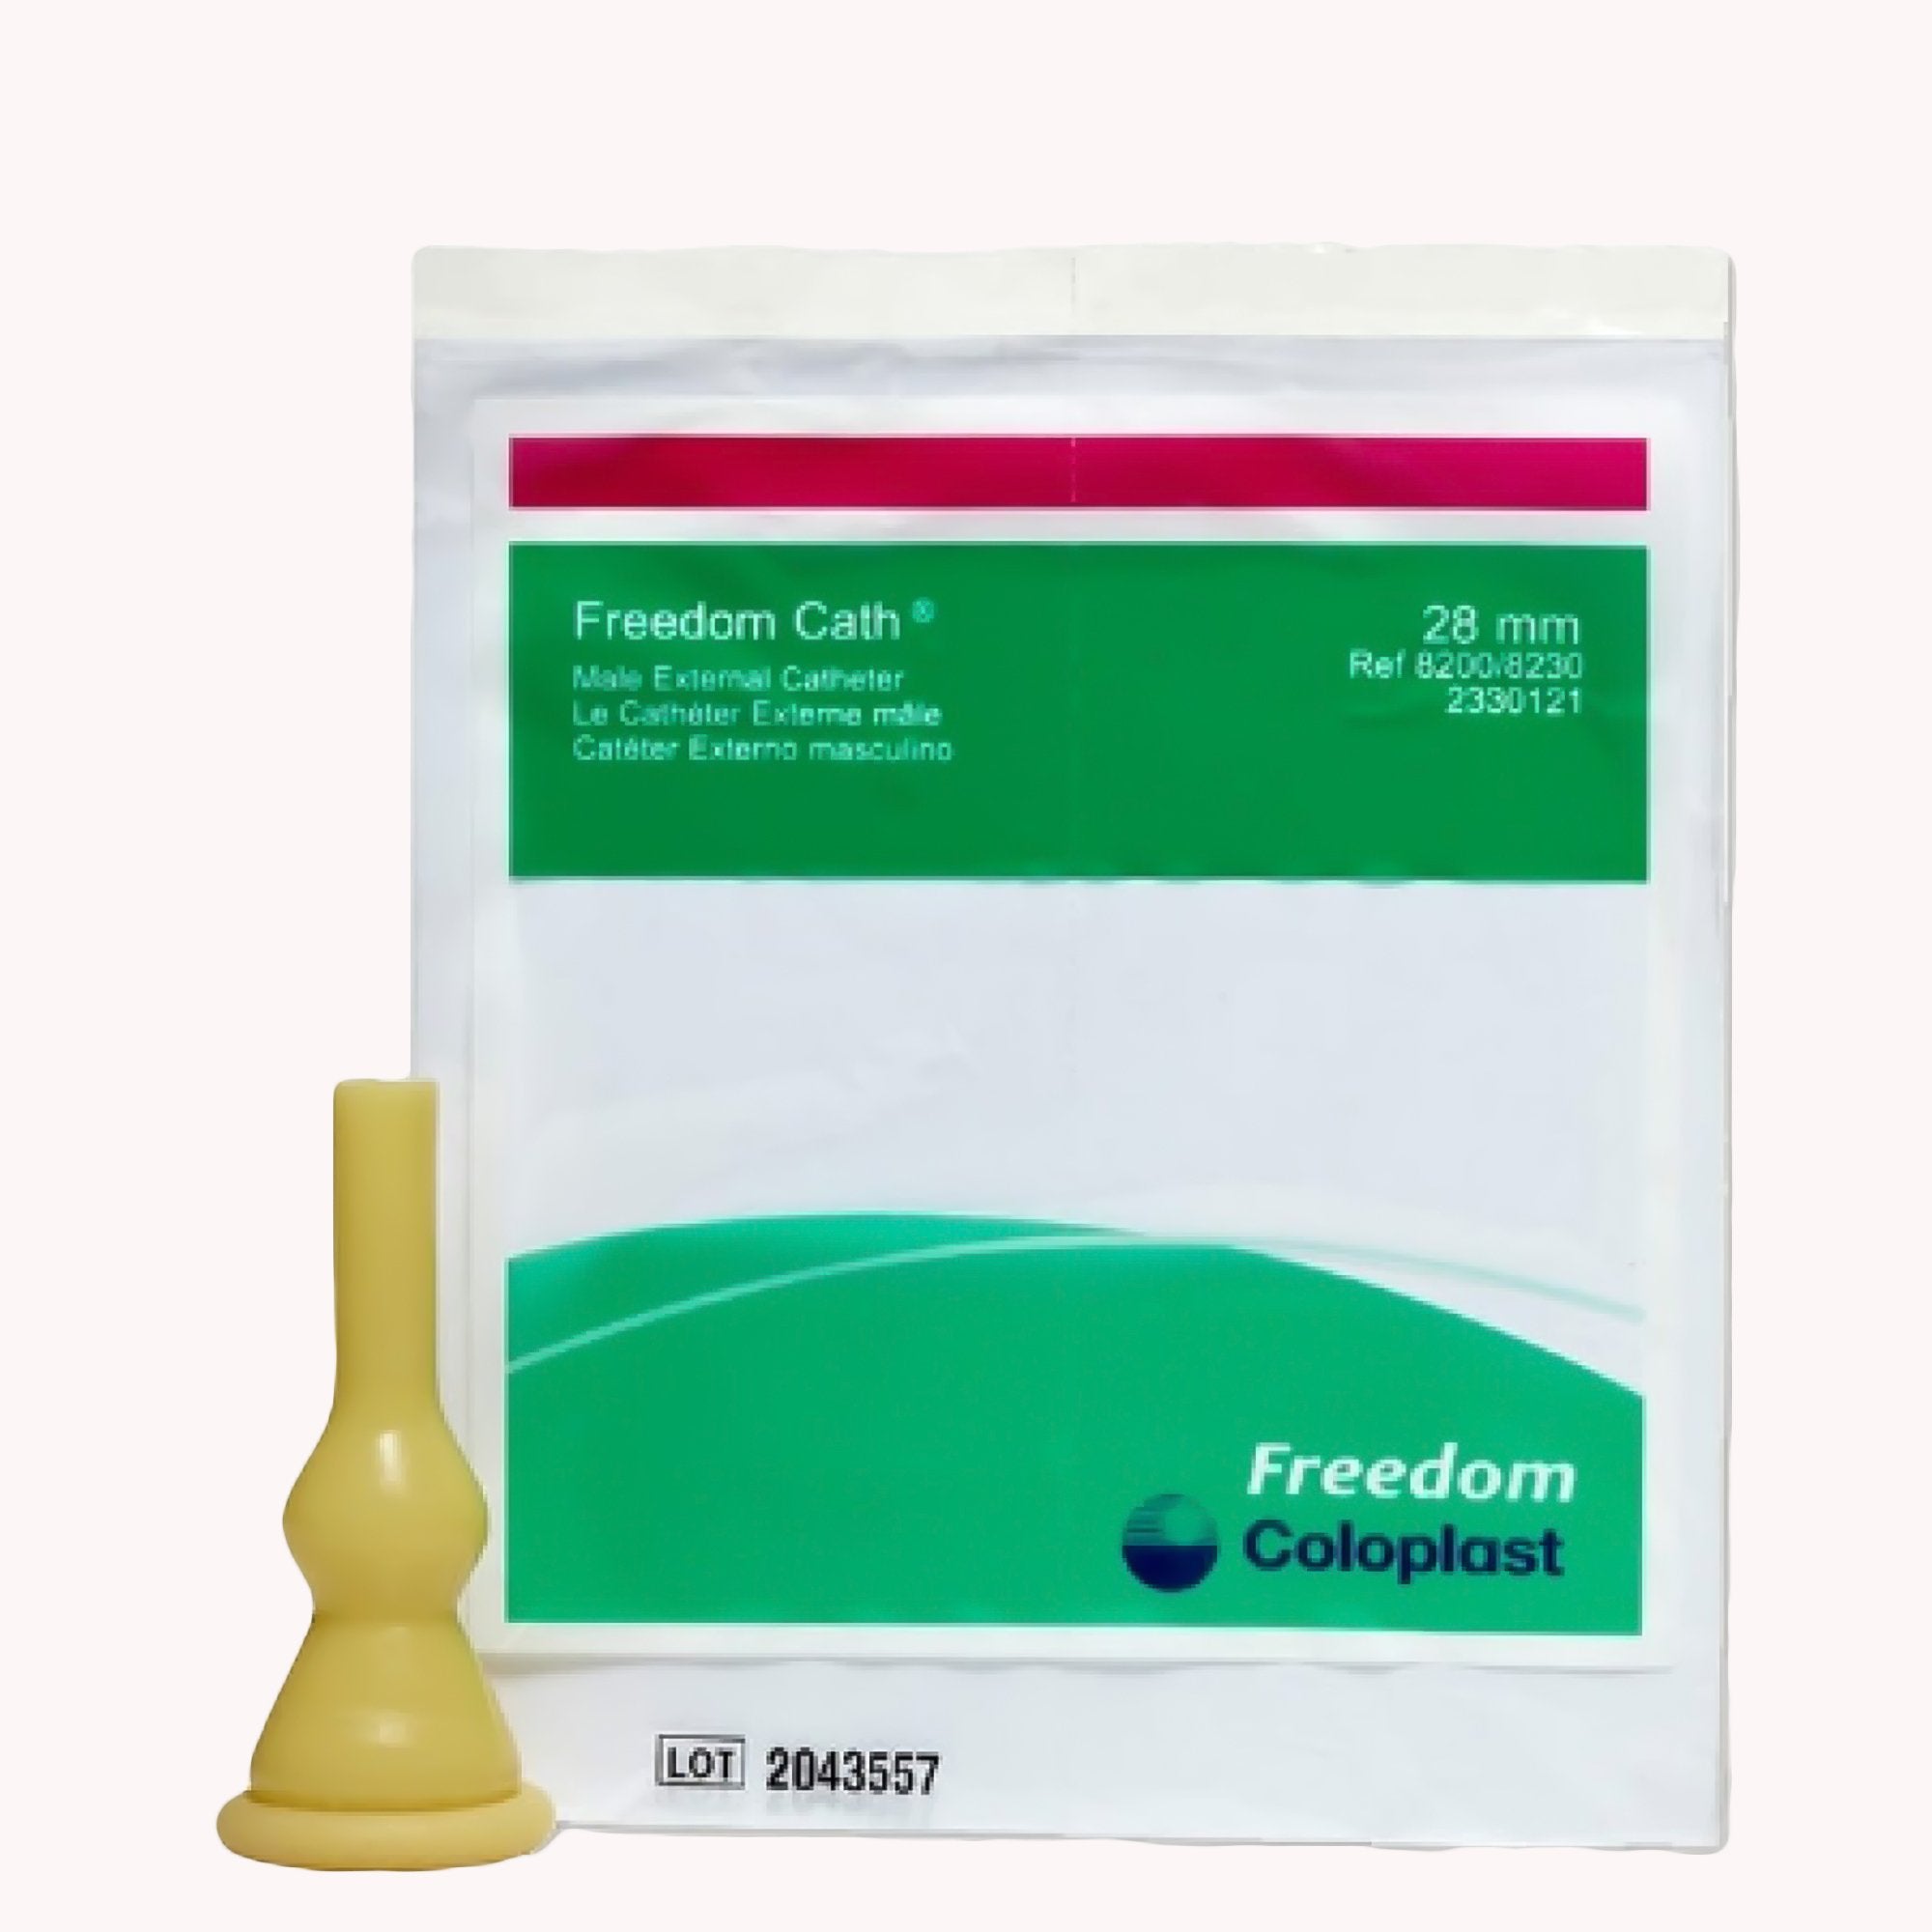 Male External Catheter Freedom Cath Self-Adhesive Latex Medium